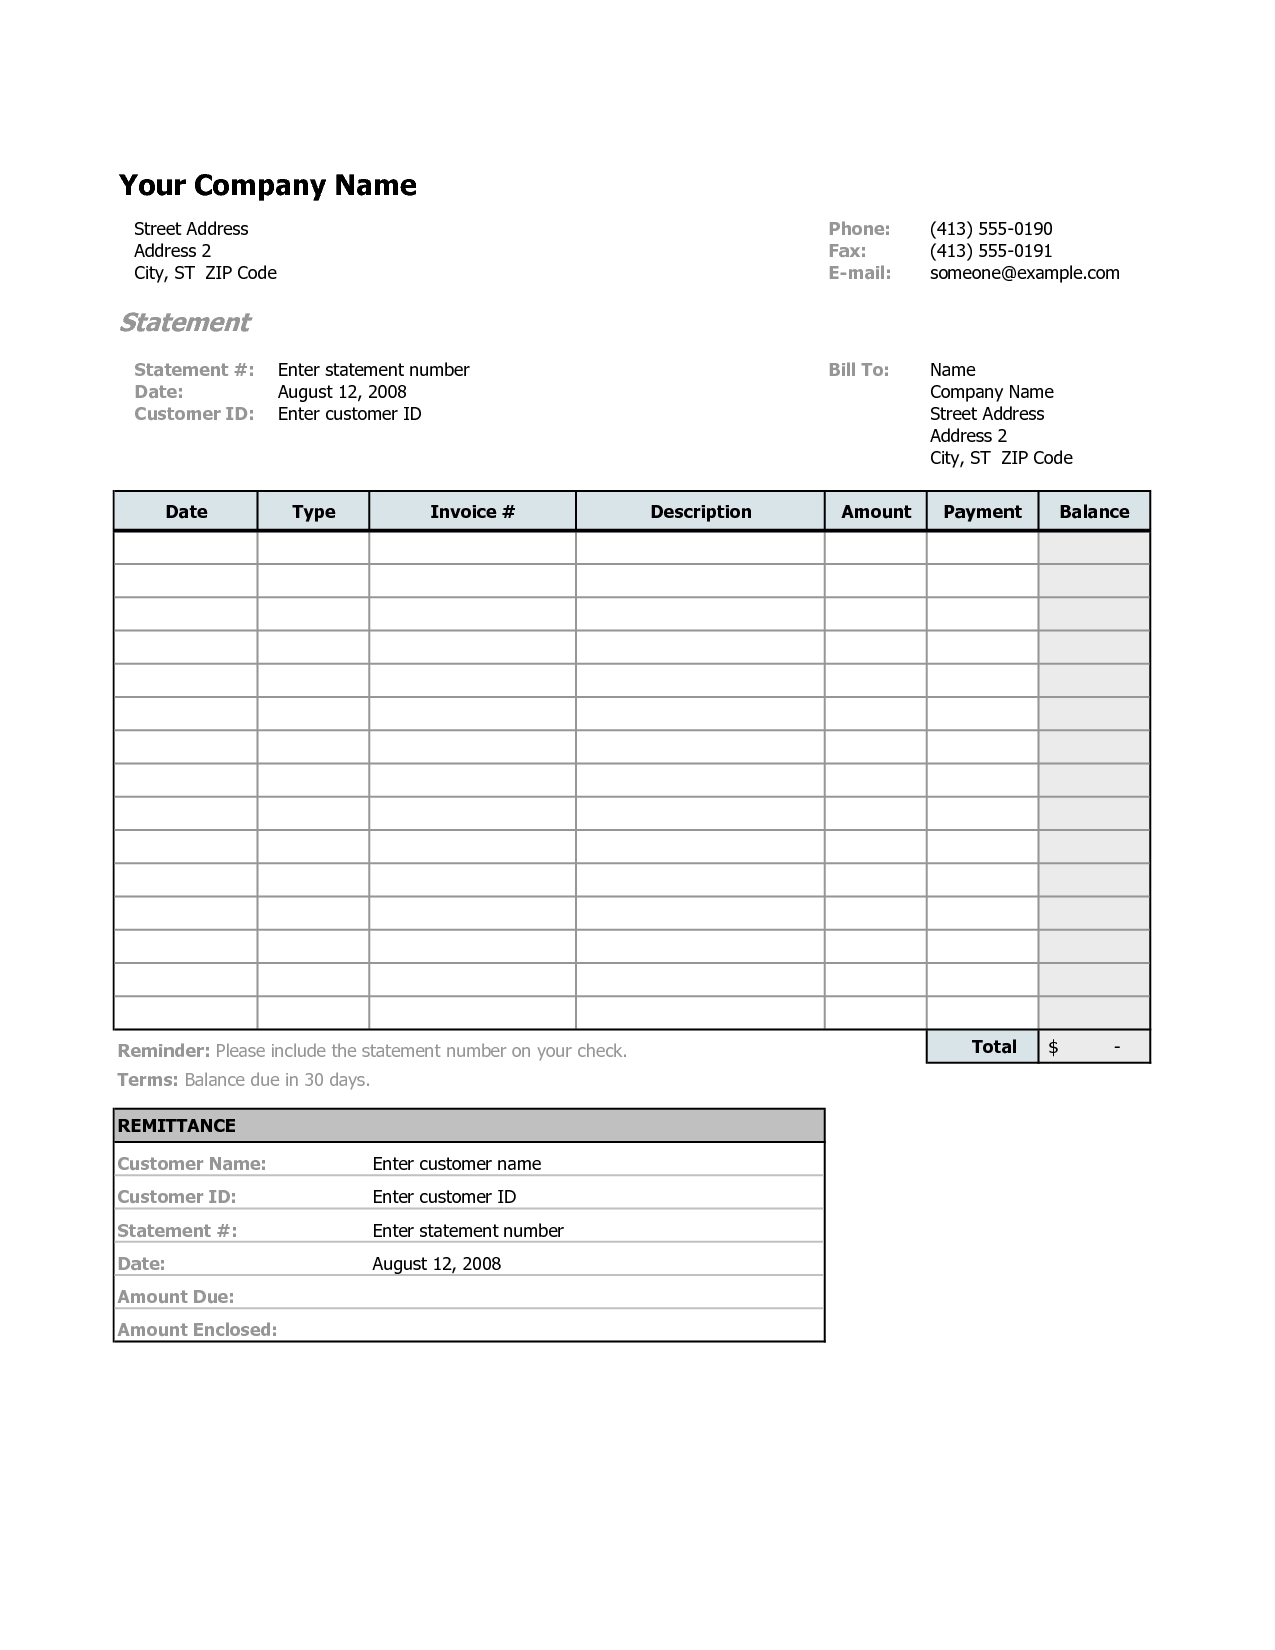 sample invoice statement free printable billing and invoice statement template sample 1275 X 1650